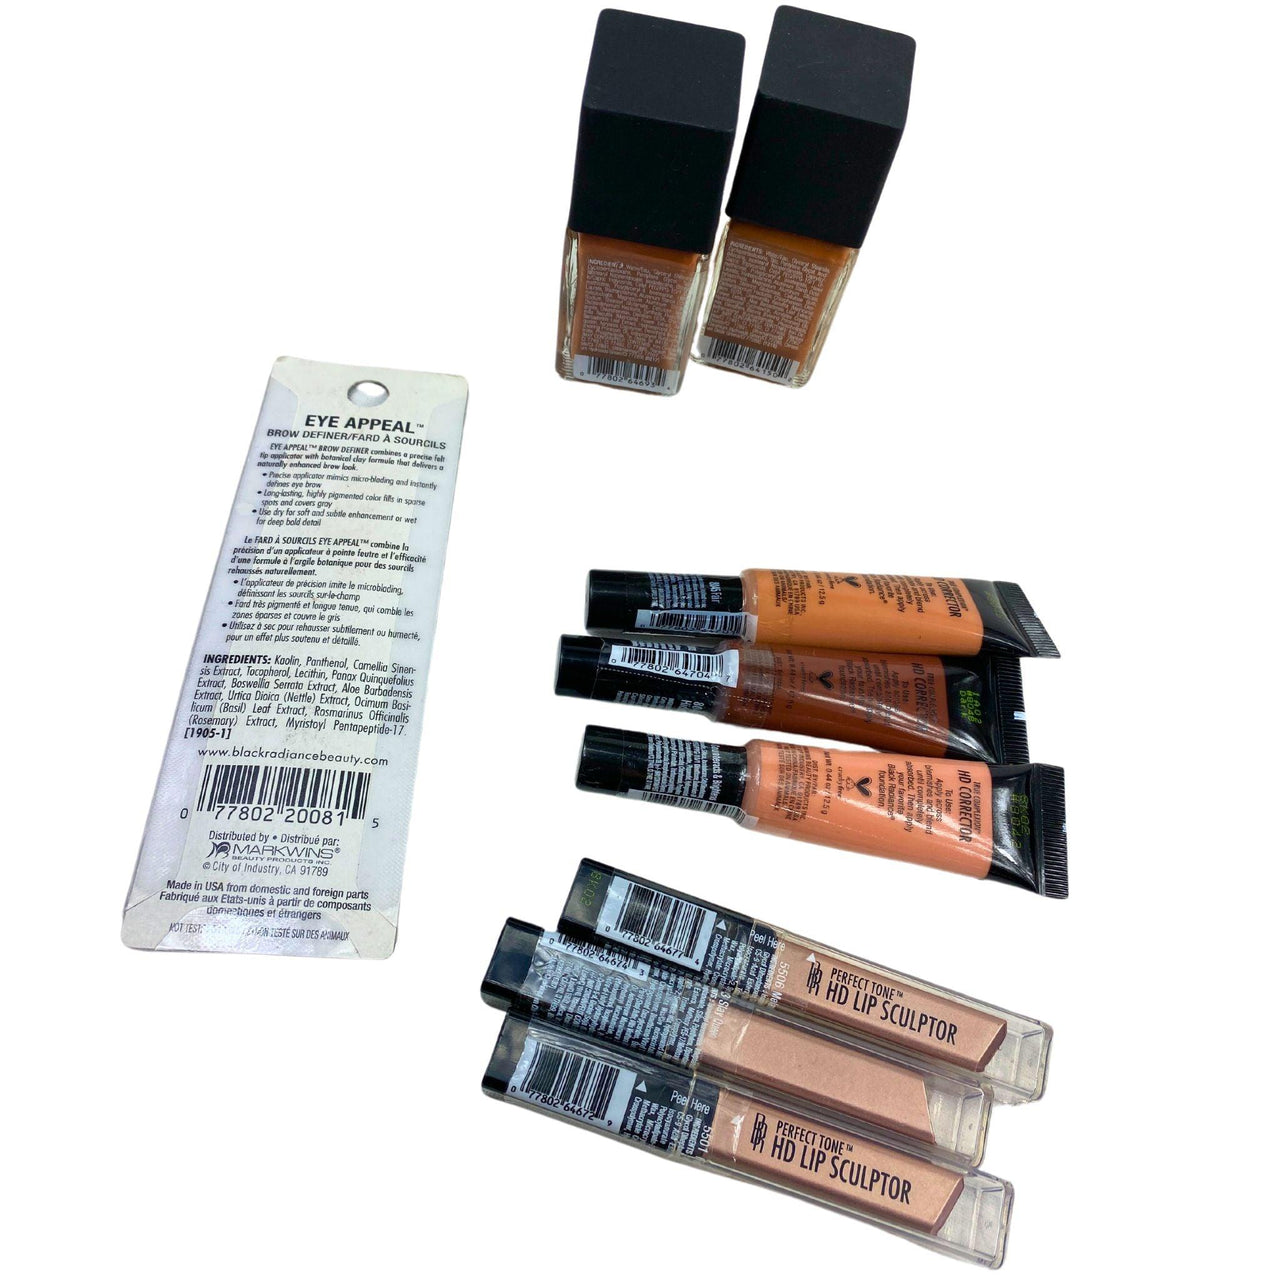 Black Radiance Makeup Mix (50 Pcs lot) - Discount Wholesalers Inc